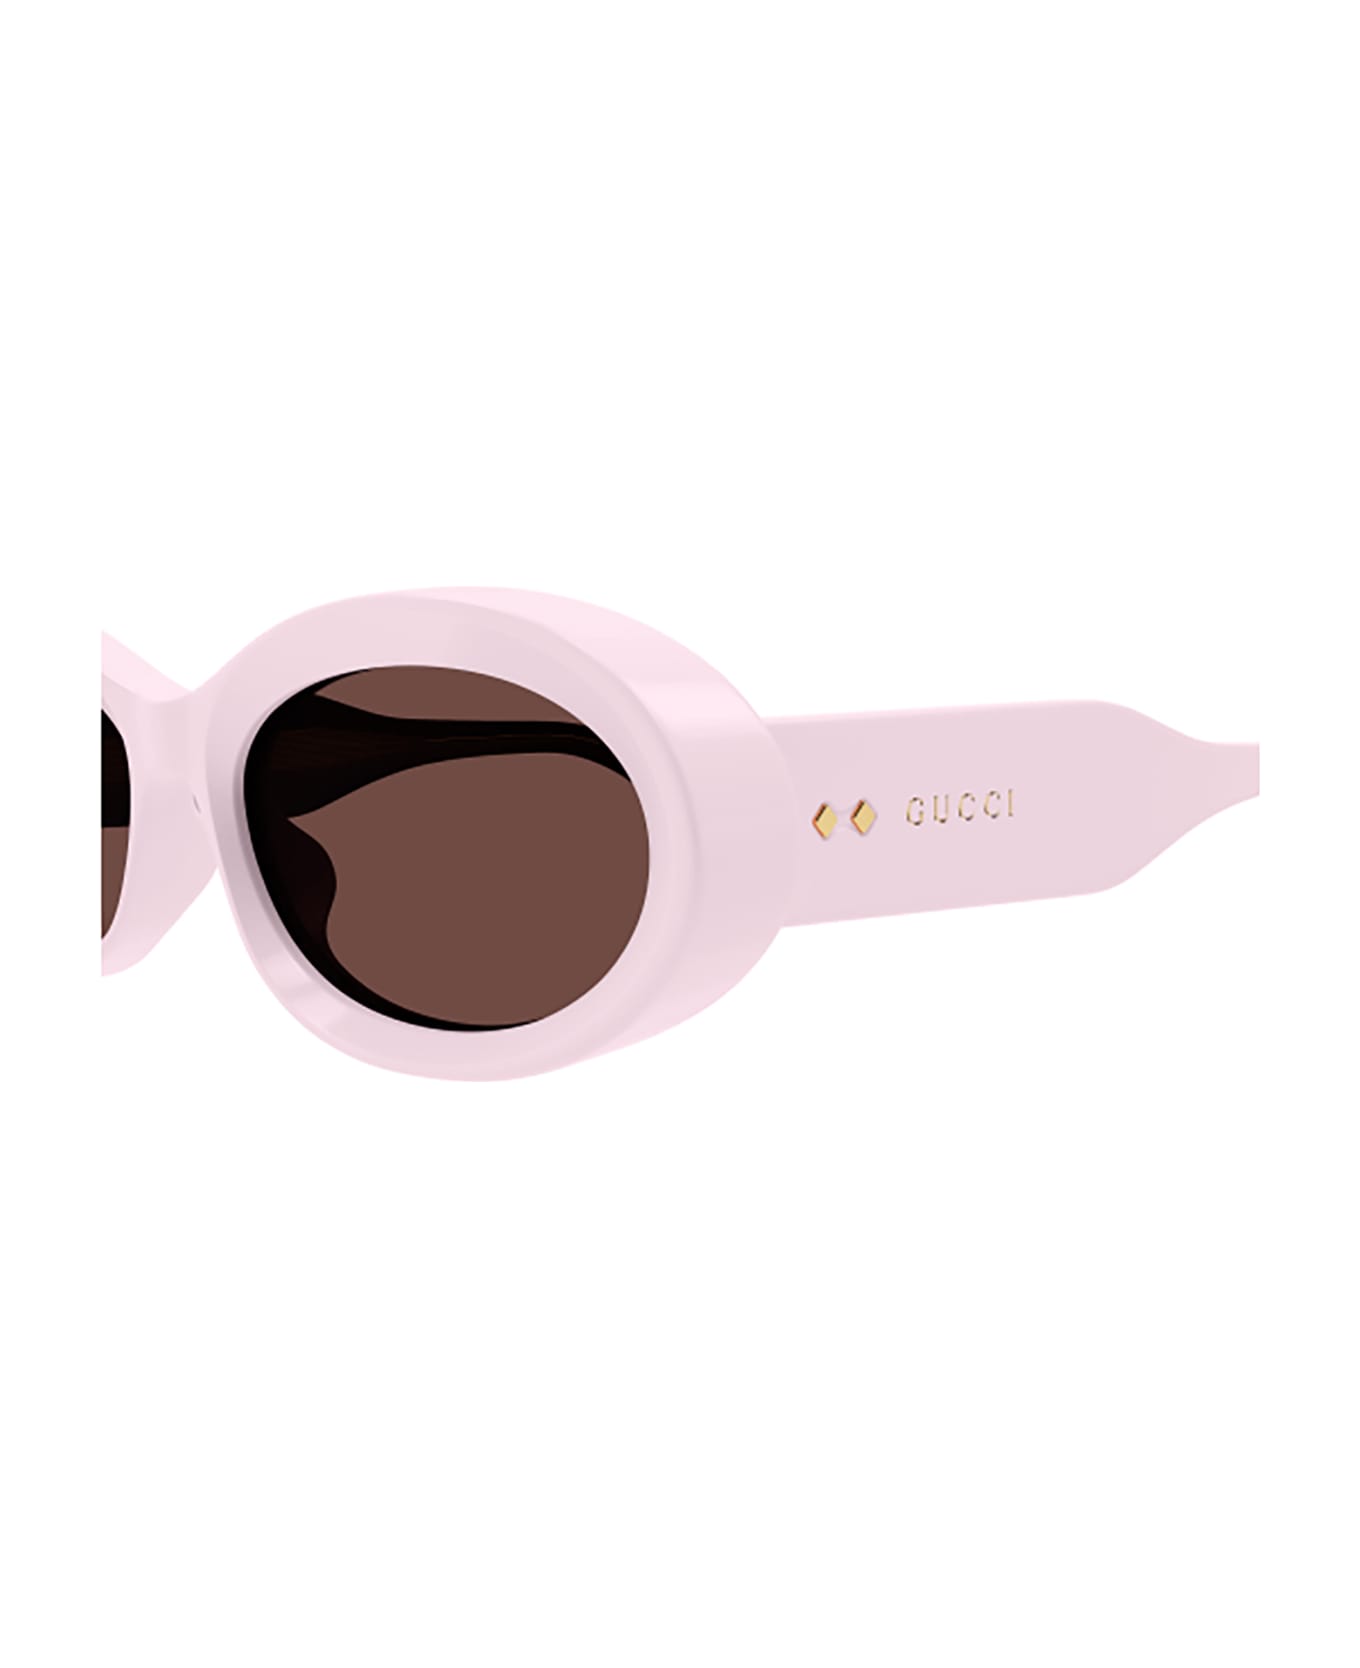 Gucci Eyewear GG1527S Sunglasses - Pink Pink Brown サングラス